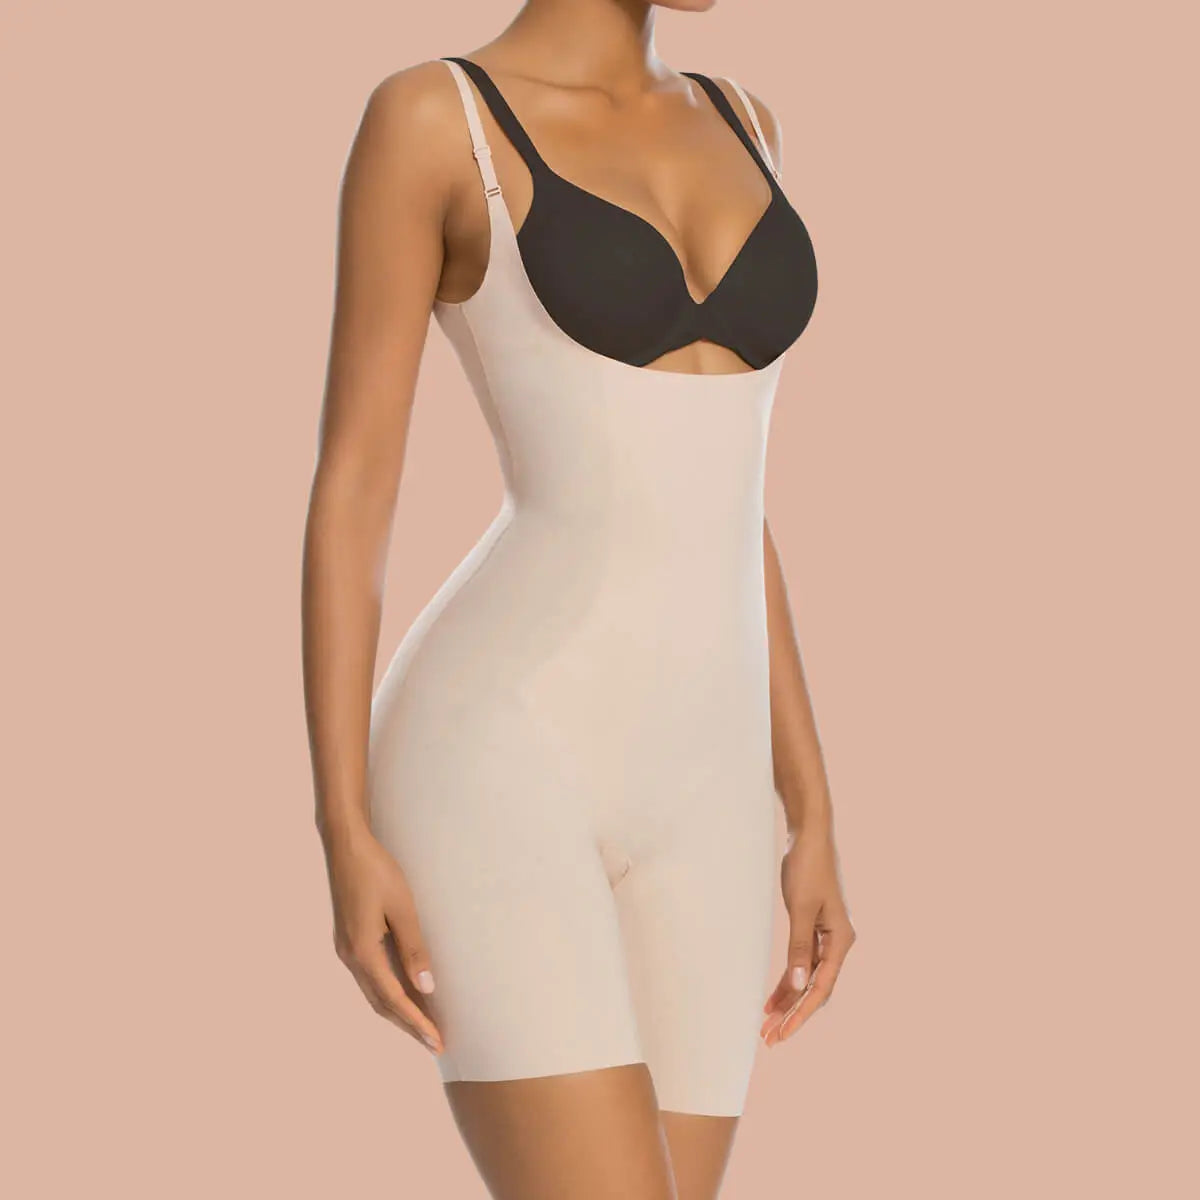 SHAPERX Bodysuit for Women Tummy Control Shapewear Seamless Body